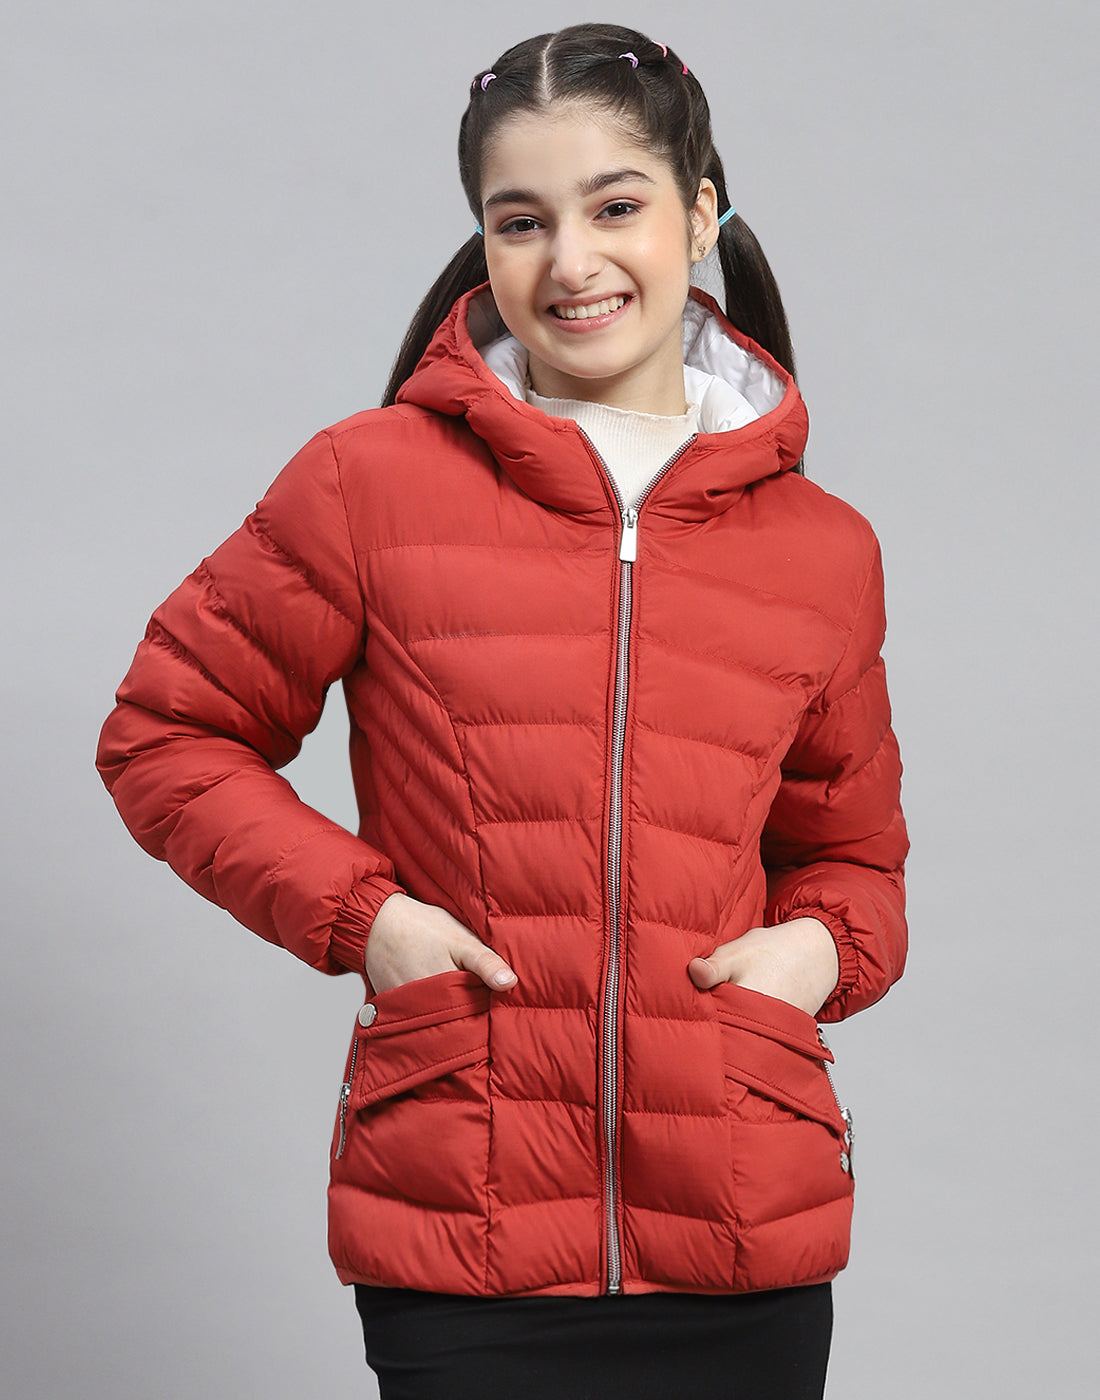 Girls Red Solid Hooded Full Sleeve Girls Jacket